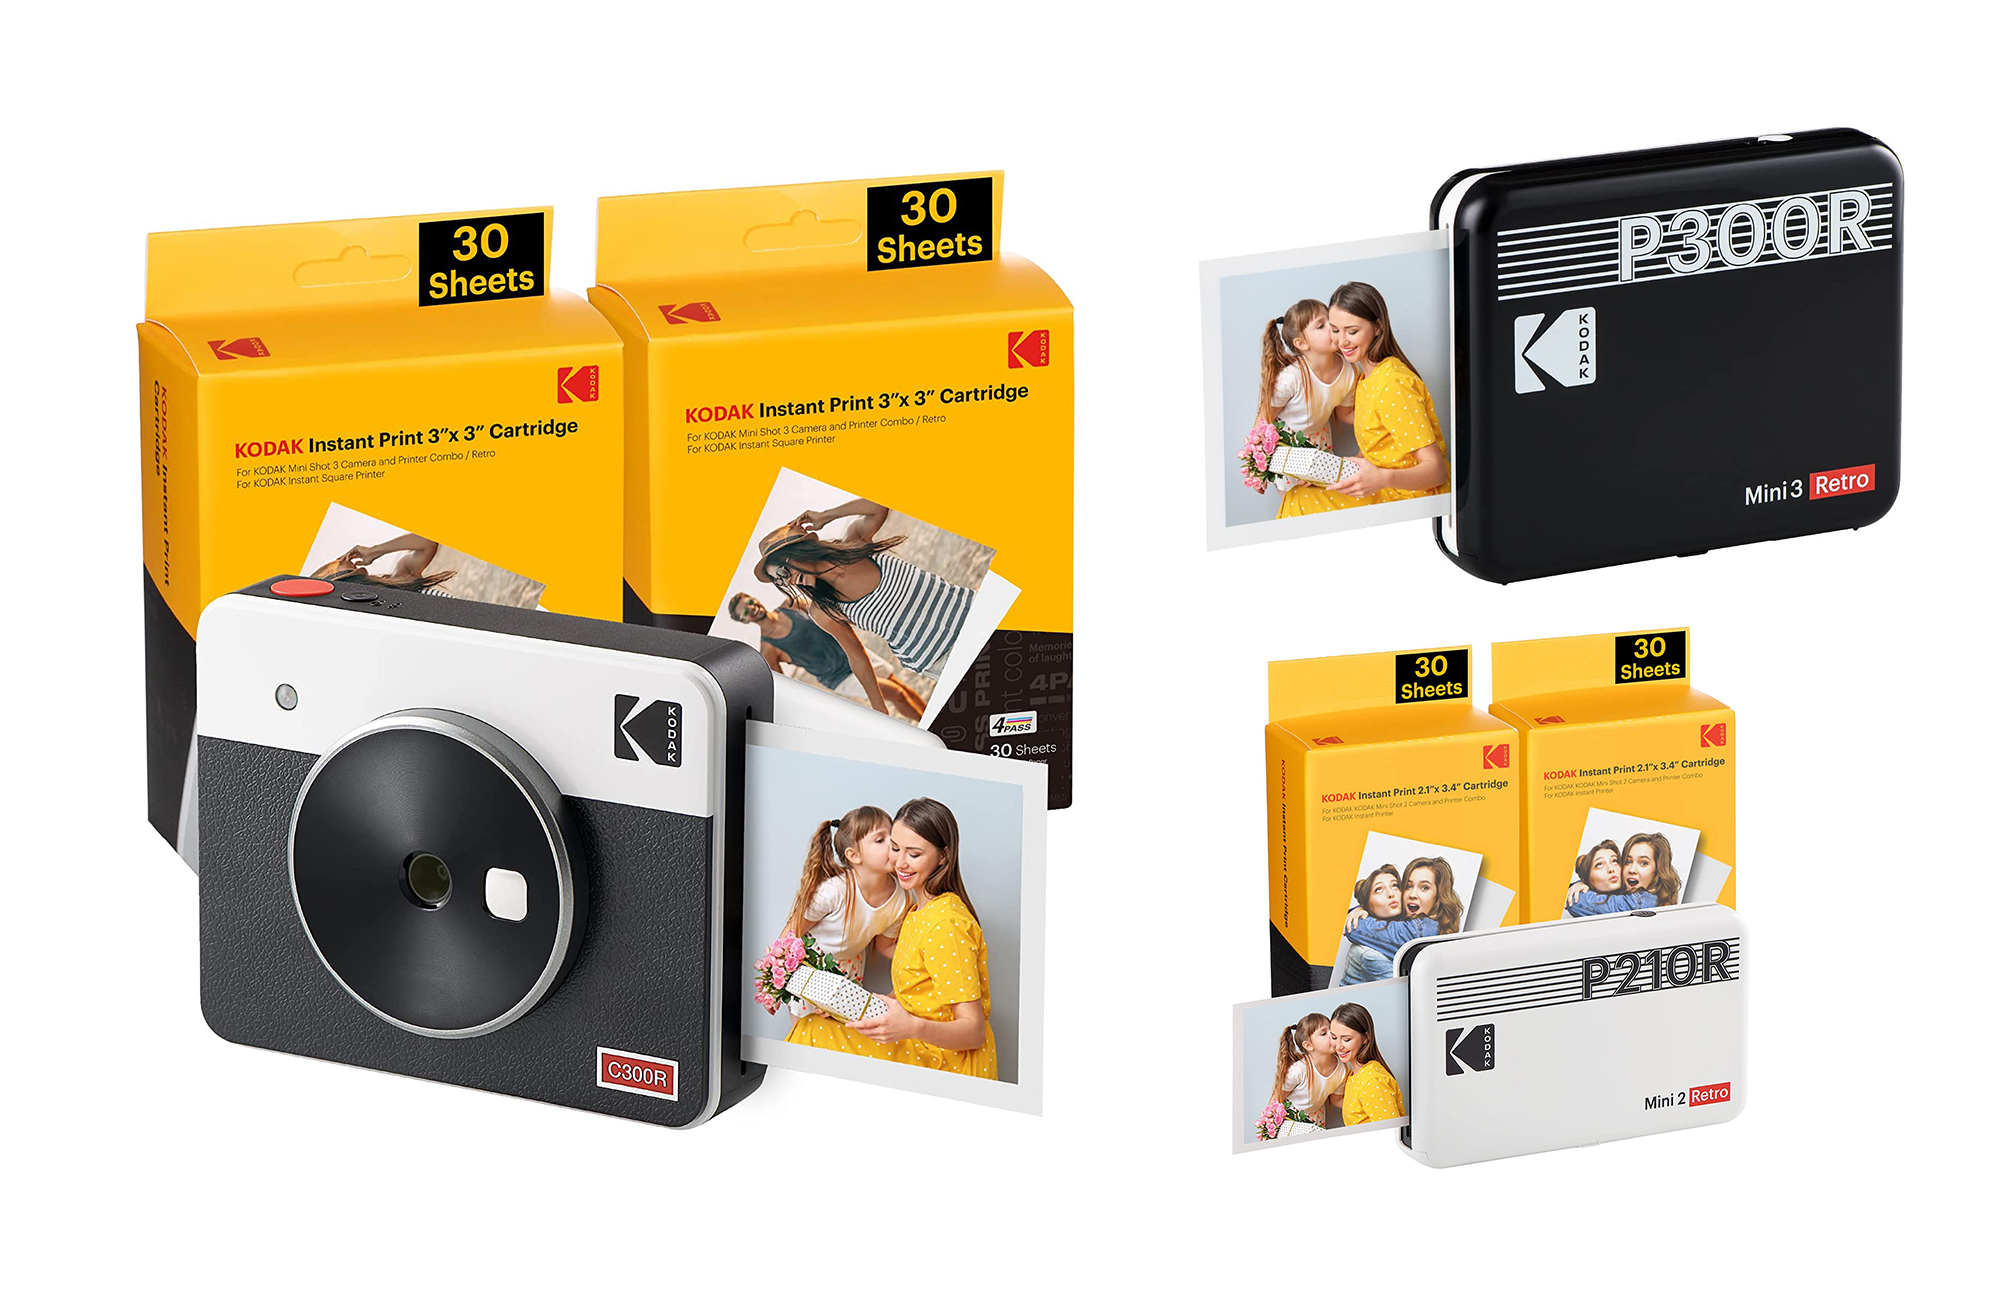 Kodak Instant Print 3x3 Cartridge For 30 Photos